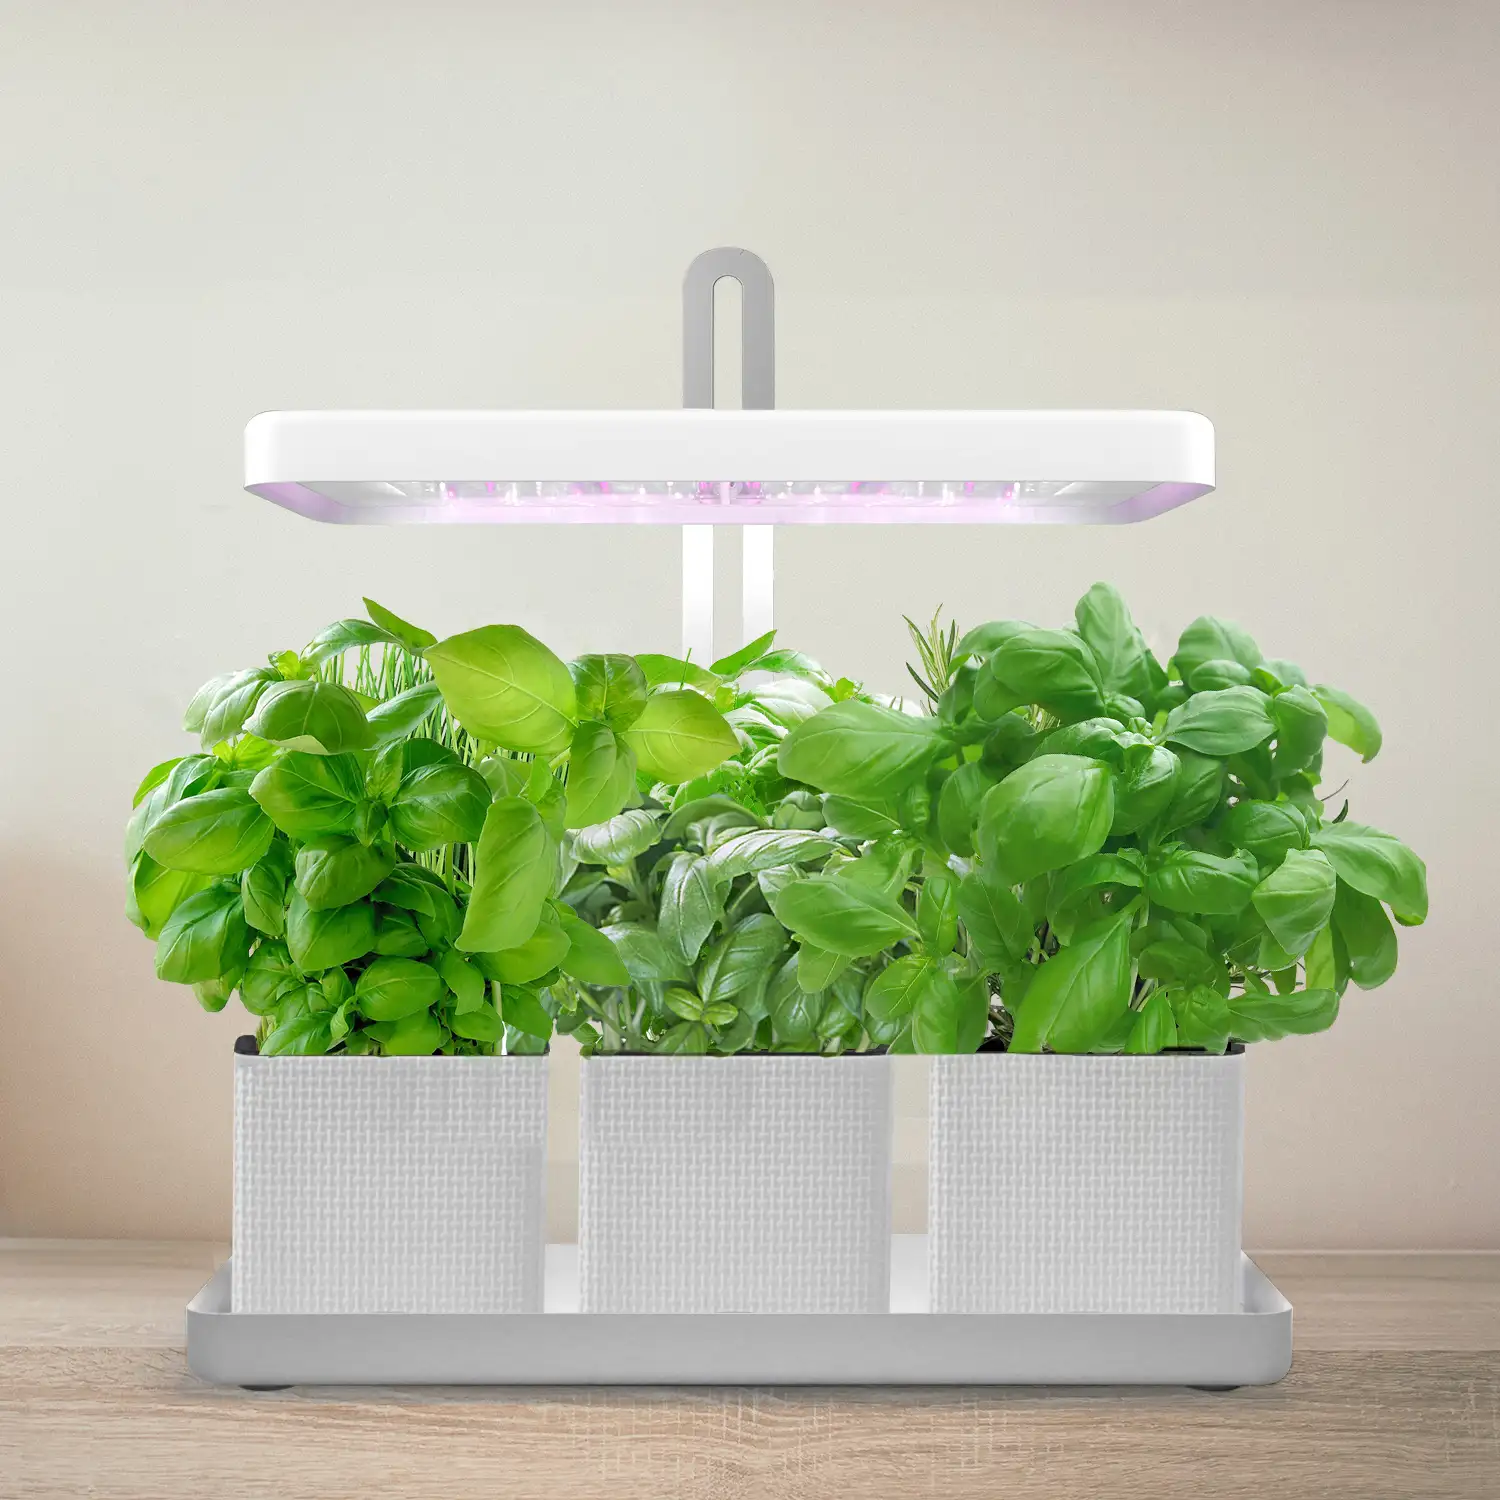 LED Indoor garden hurb kitchen garden grow light plant ideale per piante Grow top led grow light smart grow box indoor grow garden